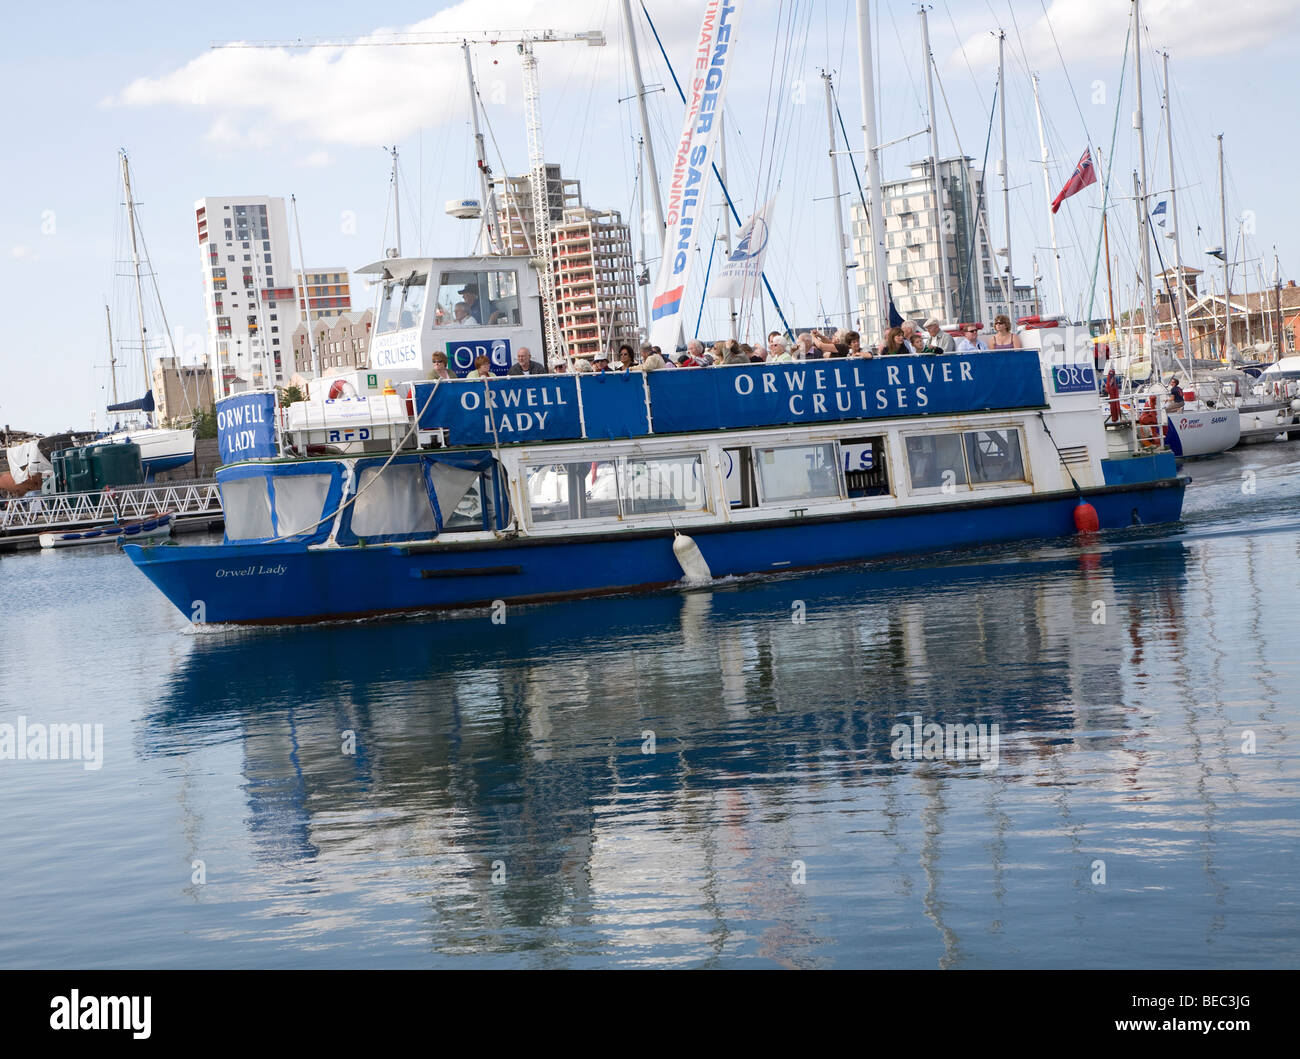 Orwell Lady, Orwell River Cruises, Wet Dock, Ipswich, England Stockfoto